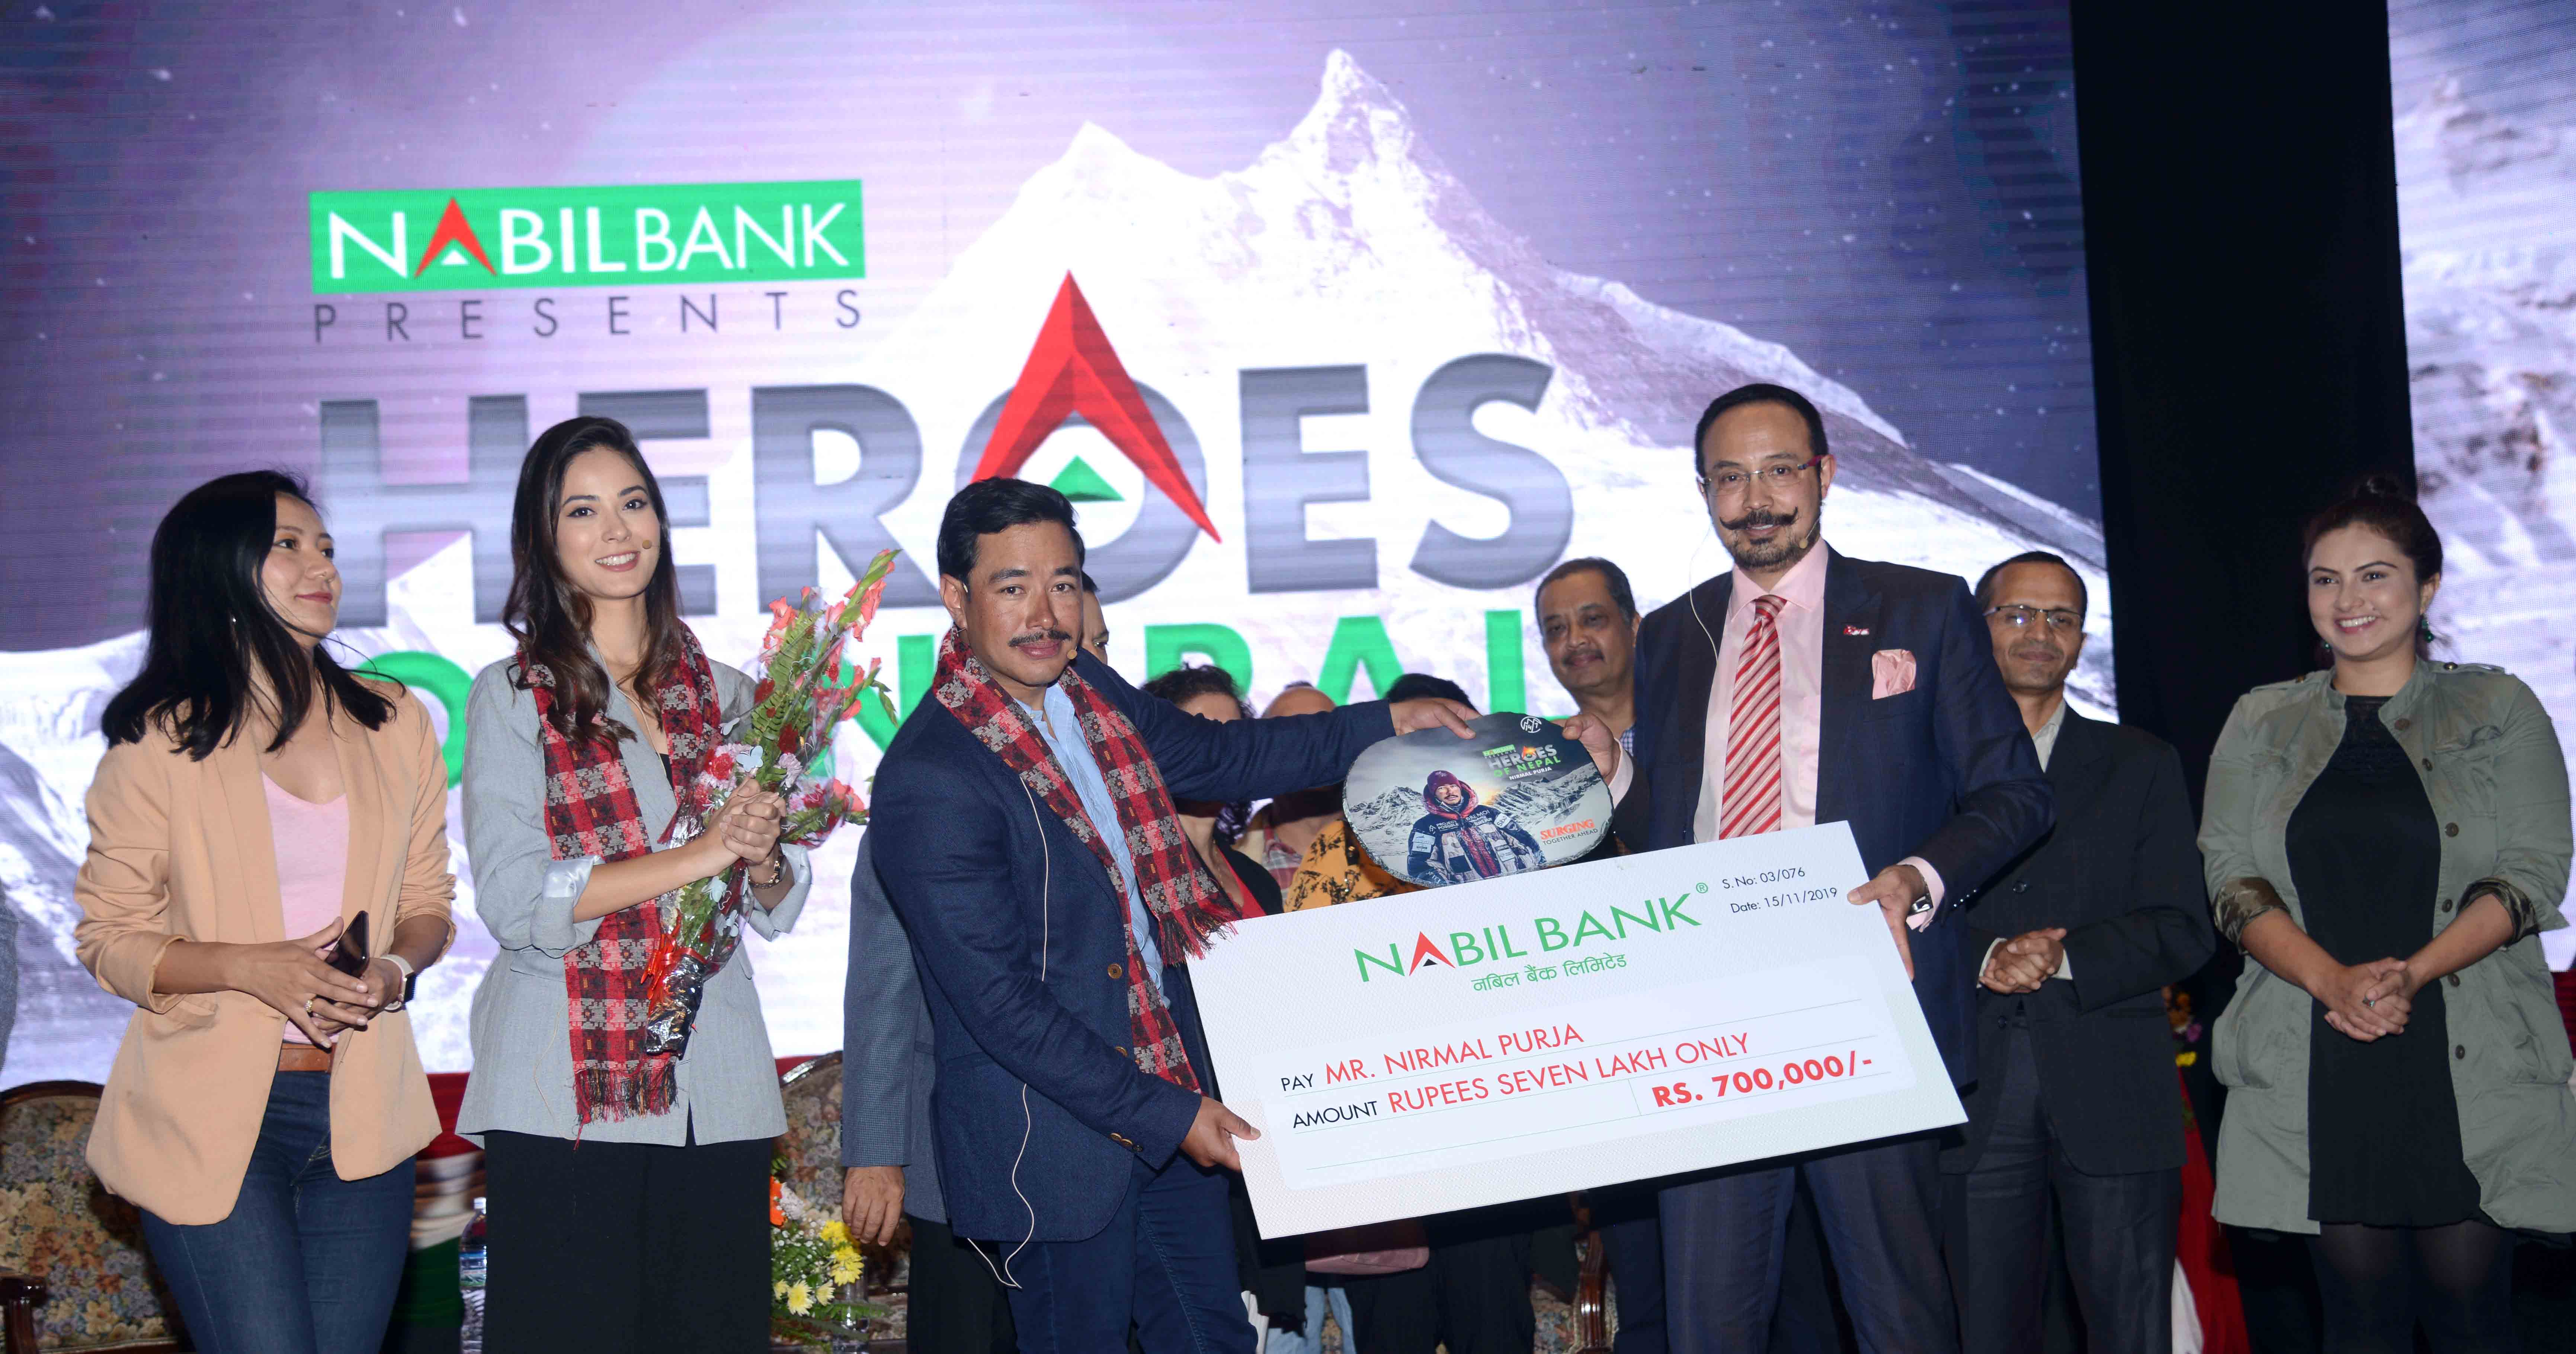 Nabil Bank Launches Heroes of Nepal series by Felicitating Nirmal Purja